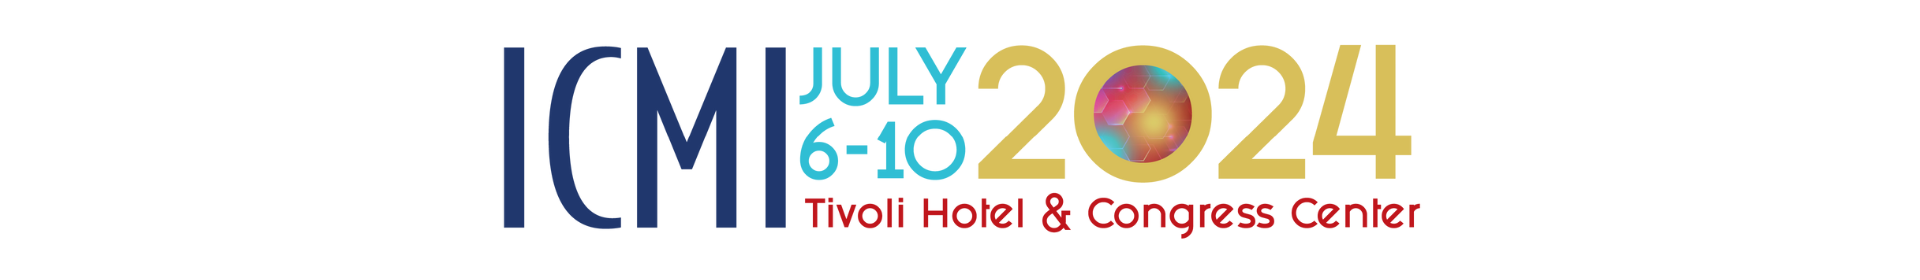 International Congress of Mucosal Immunology ICMI 2024 Event Banner